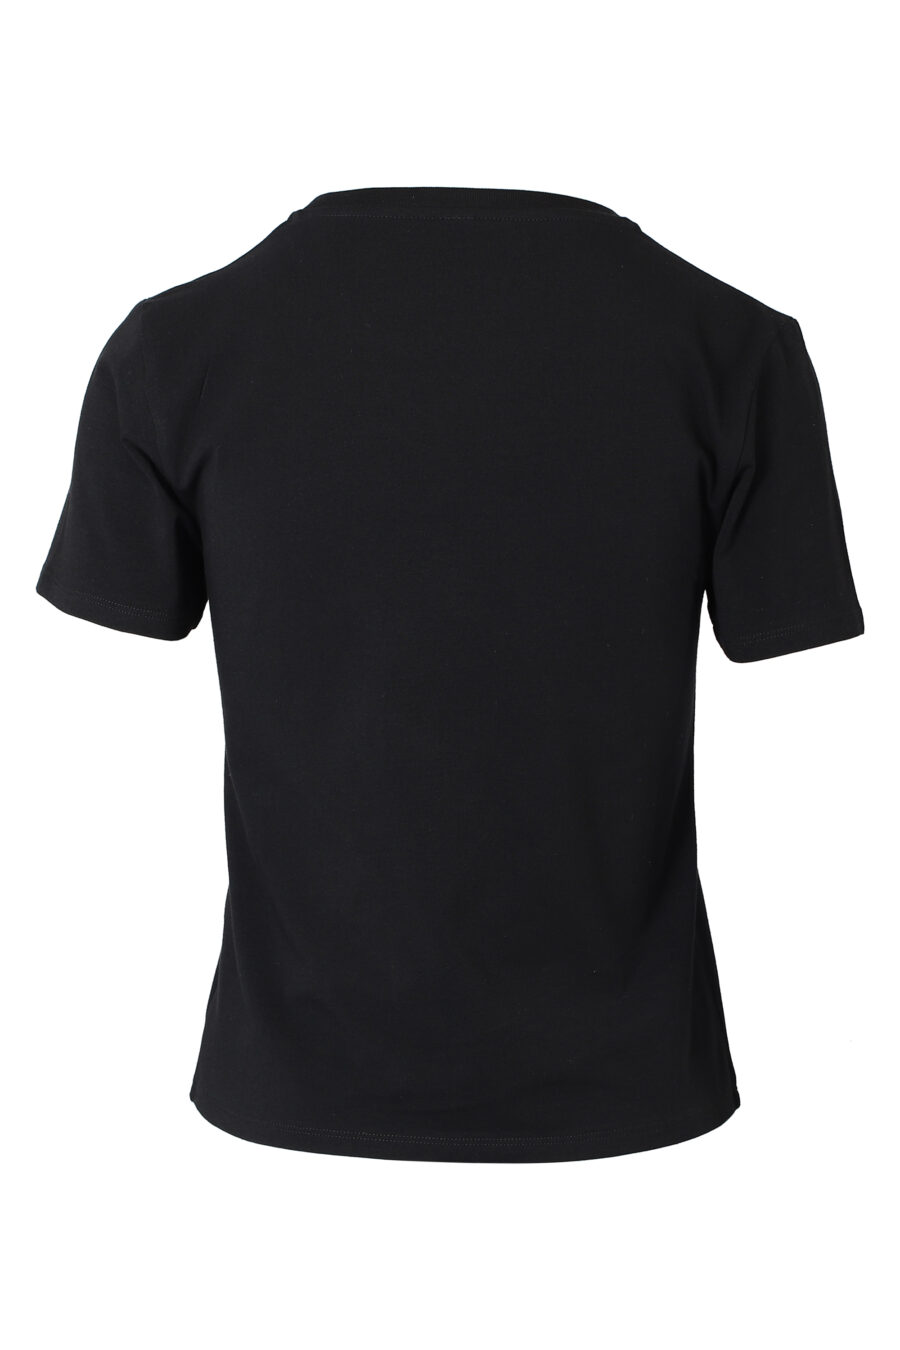 Camiseta negra con minilogo dorado con strass y nudo frontal - IMG 9836